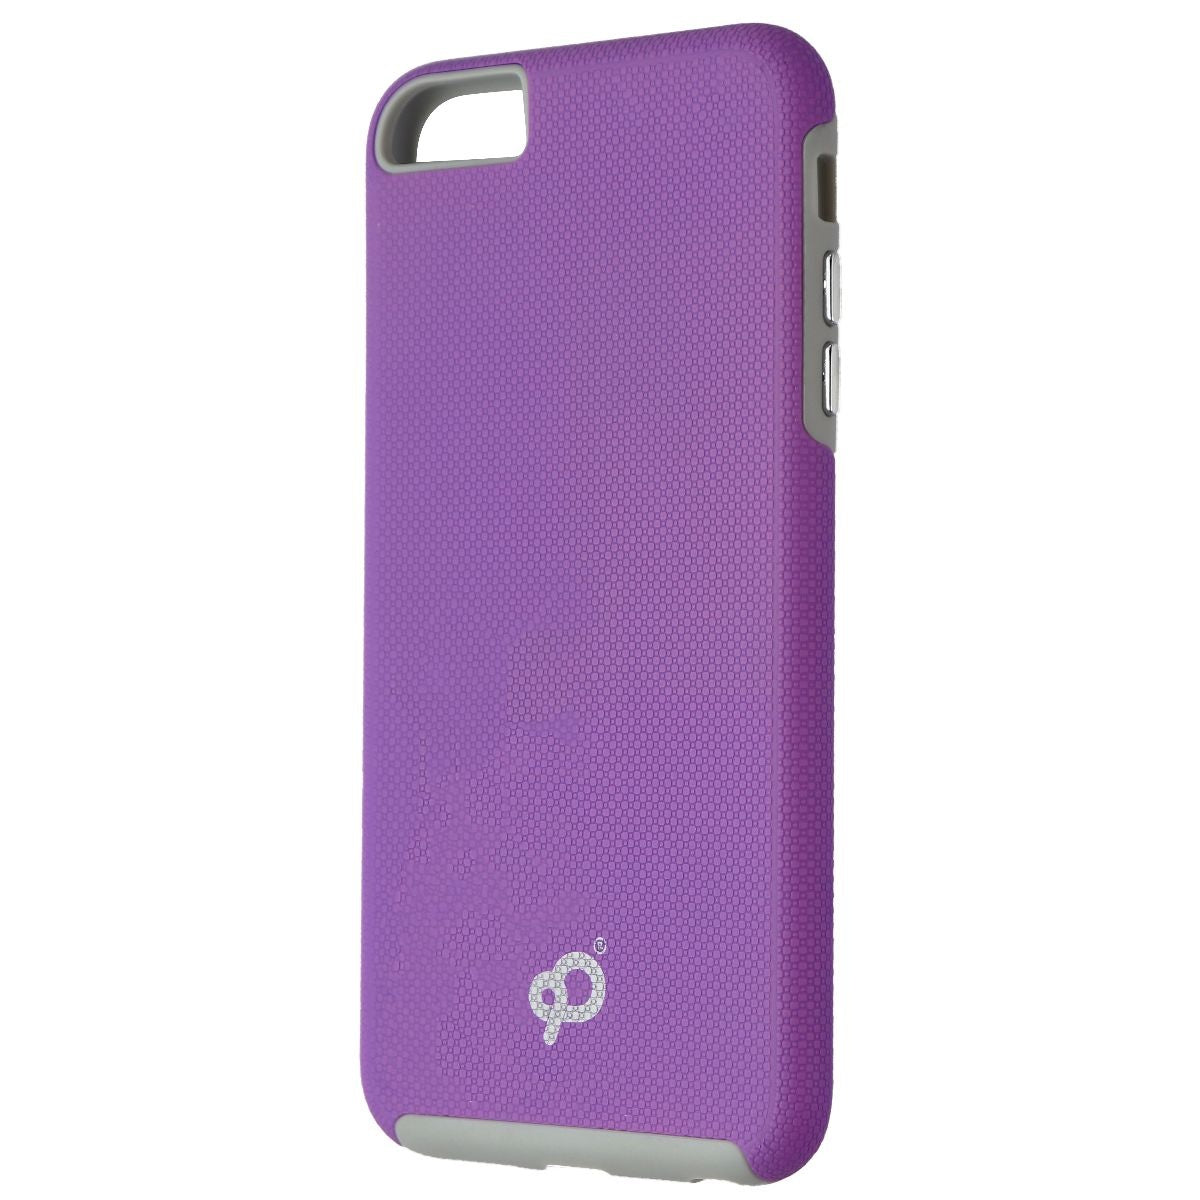 Nimbus9 Latitude Series Case for iPhone 6s Plus/ 6 Plus - Purple/Gray Cell Phone - Cases, Covers & Skins Nimbus9    - Simple Cell Bulk Wholesale Pricing - USA Seller